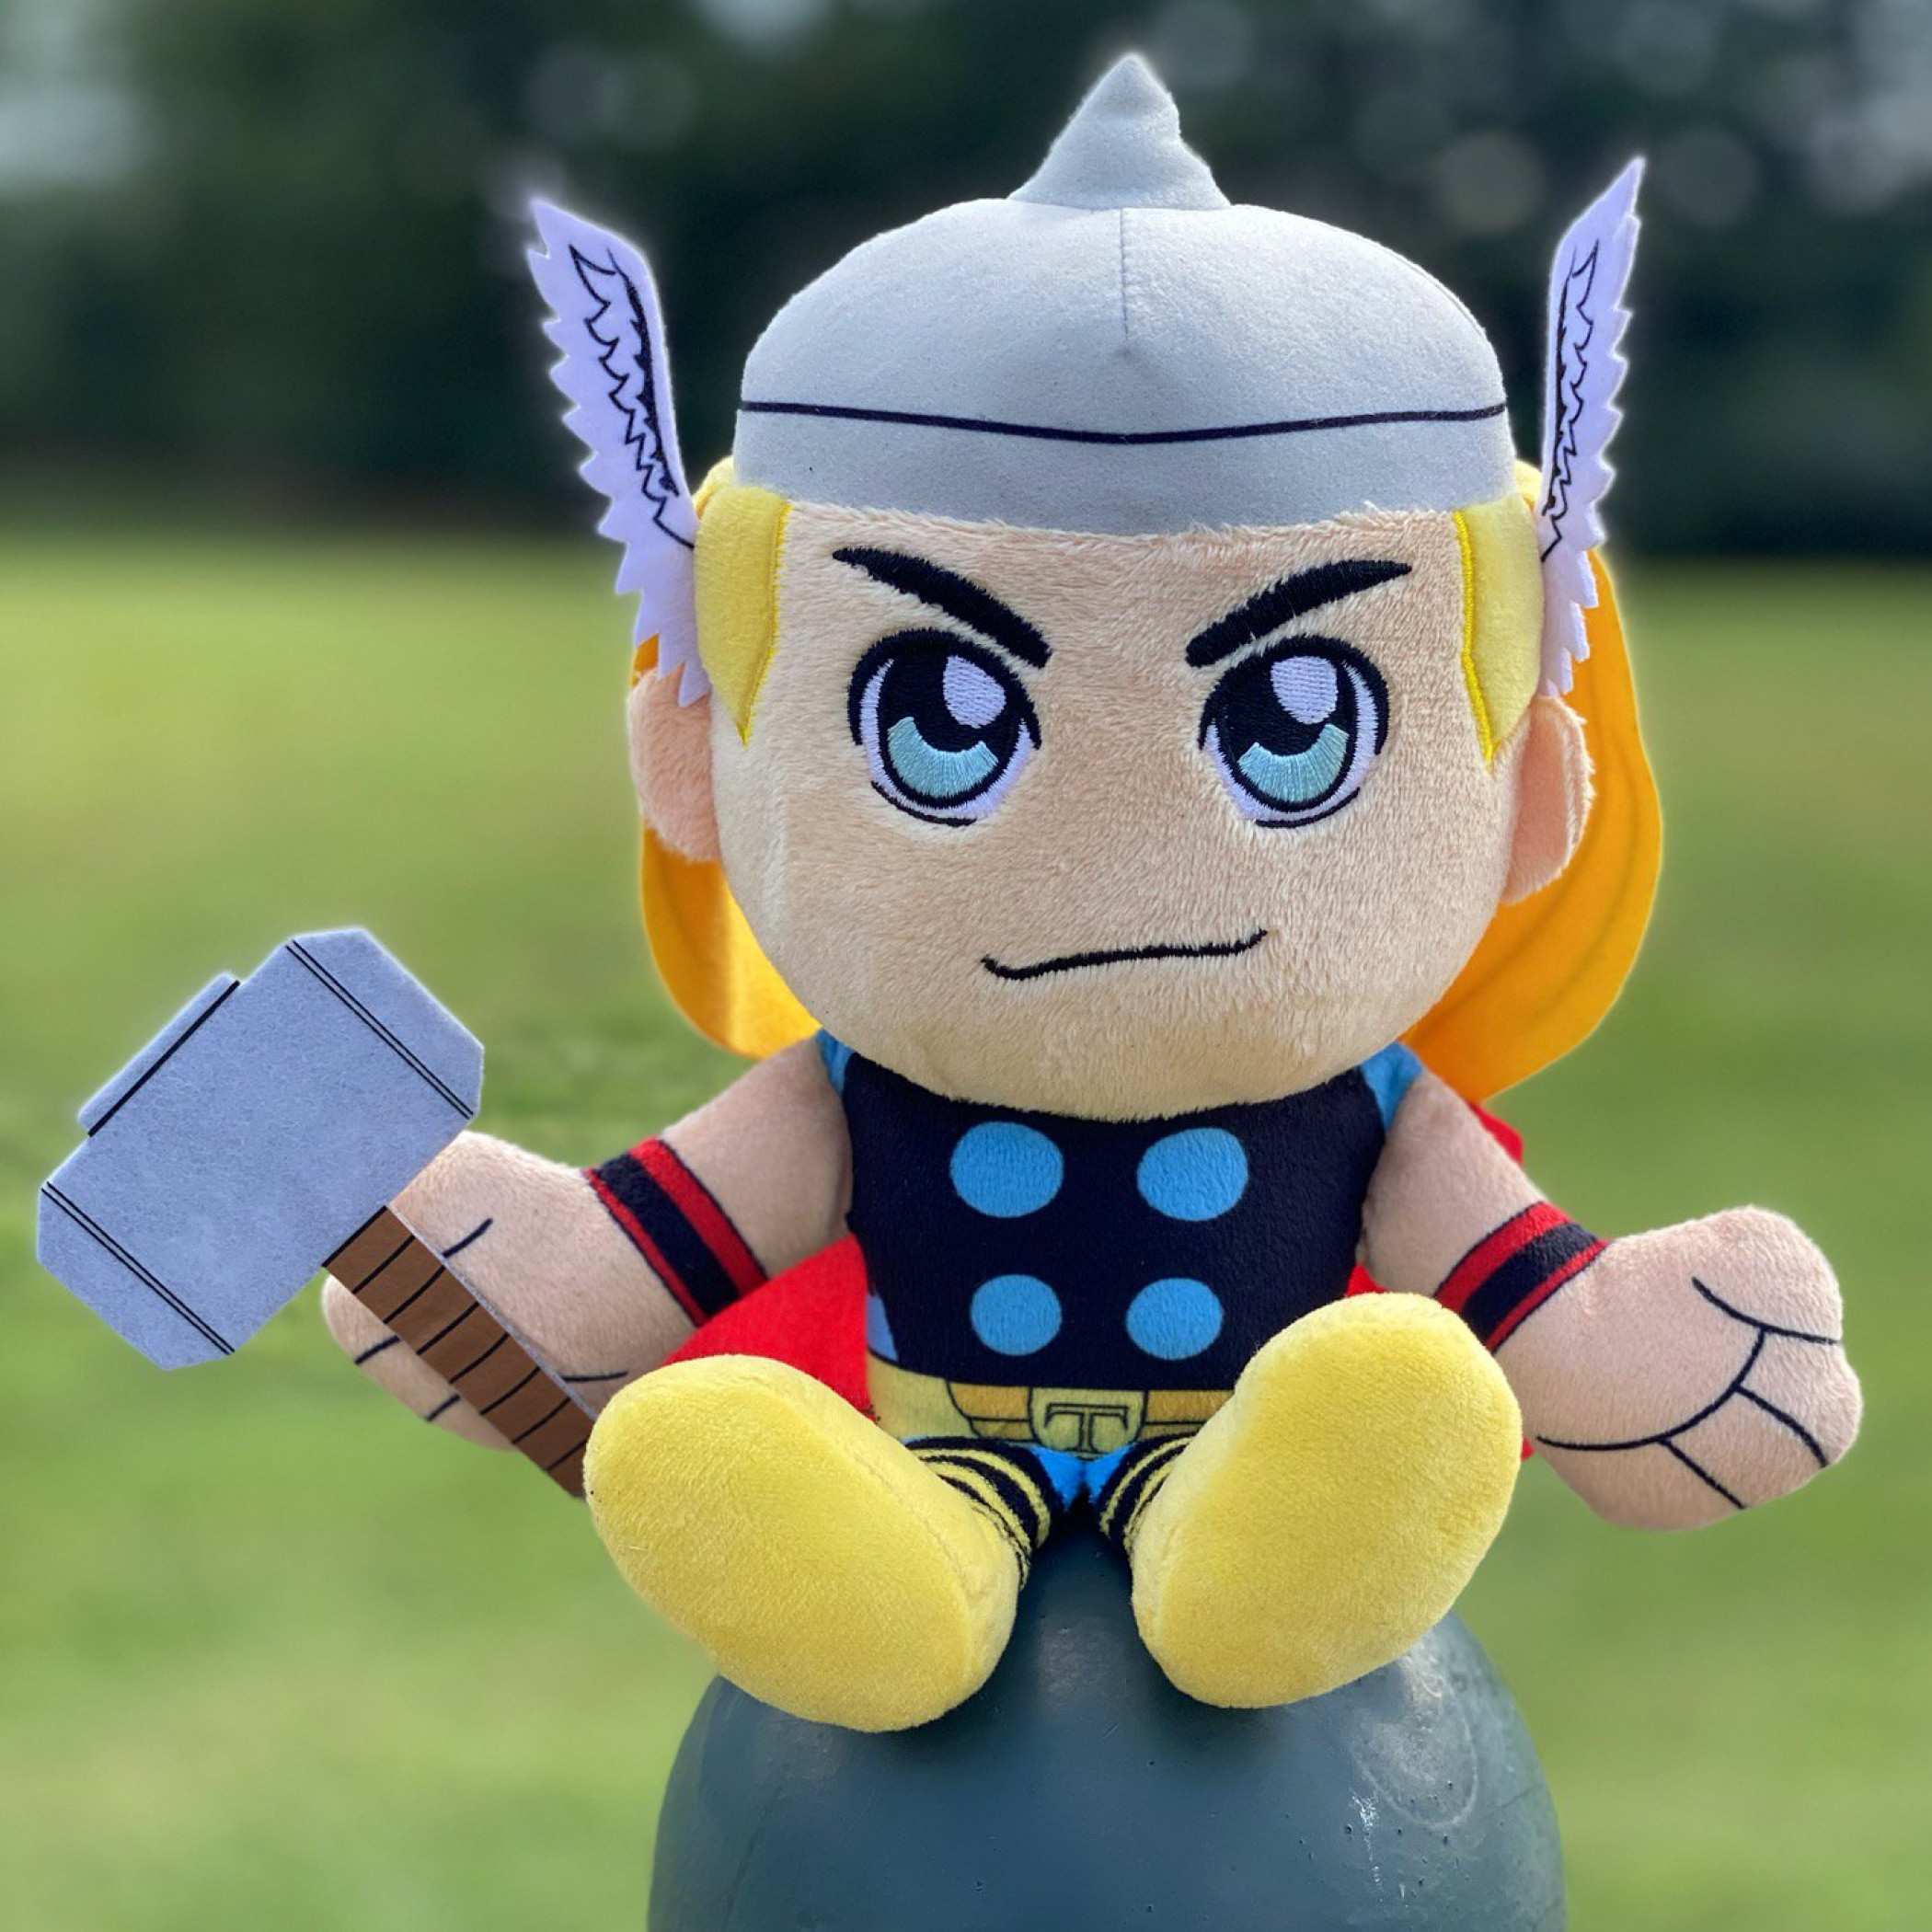 Marvel Thor 8 Inch Kuricha Sitting Plush Doll